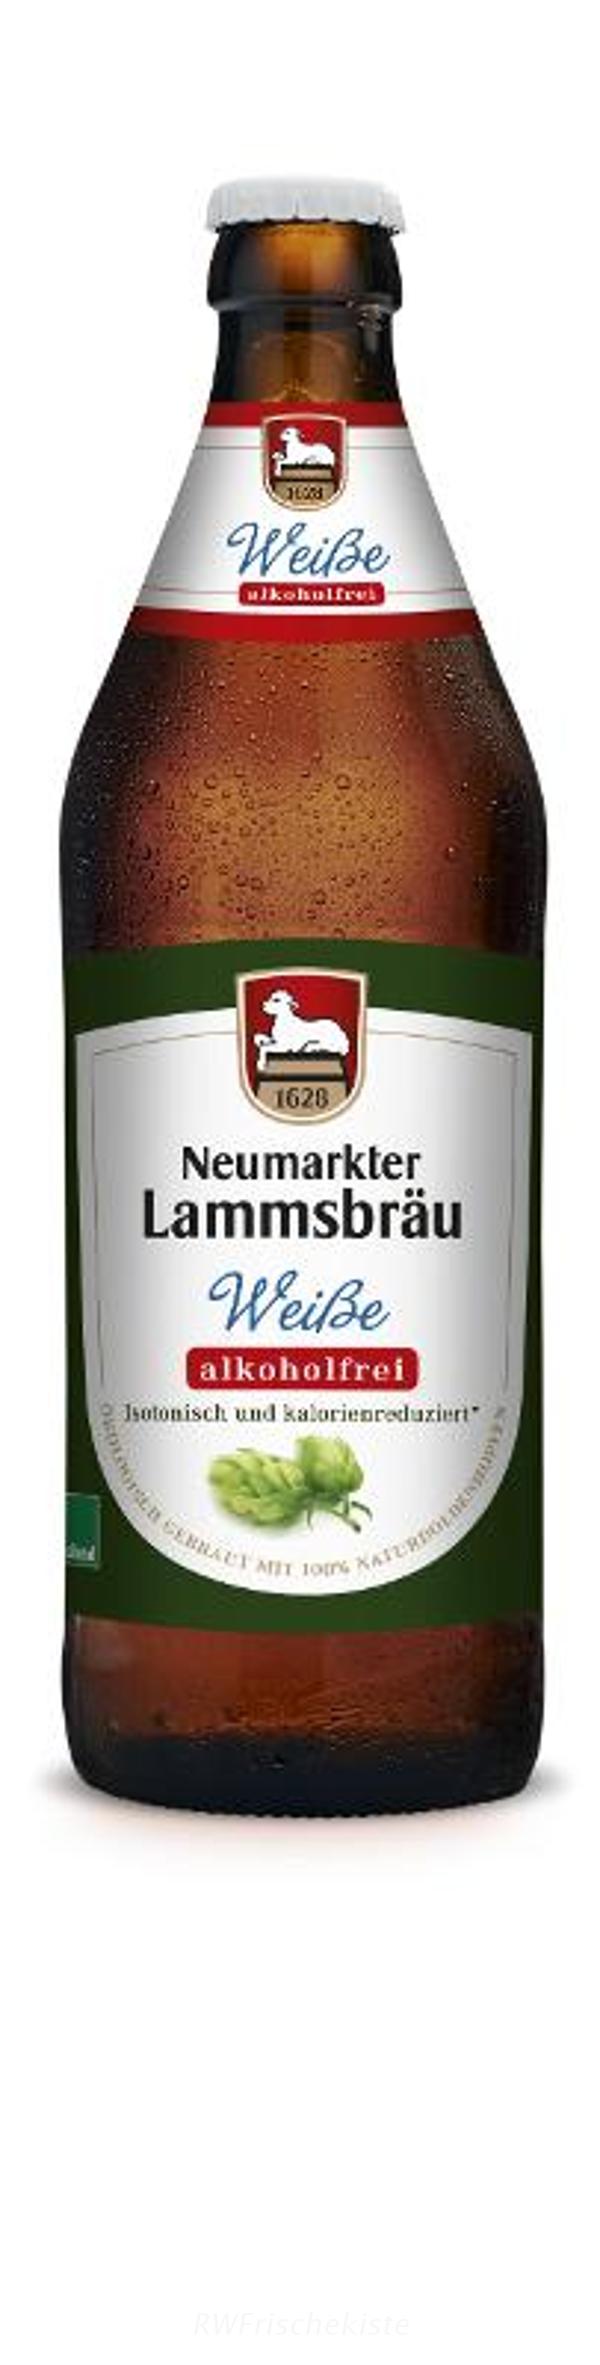 Produktfoto zu Lammsbräu Weisse alkoholfrei Flasche